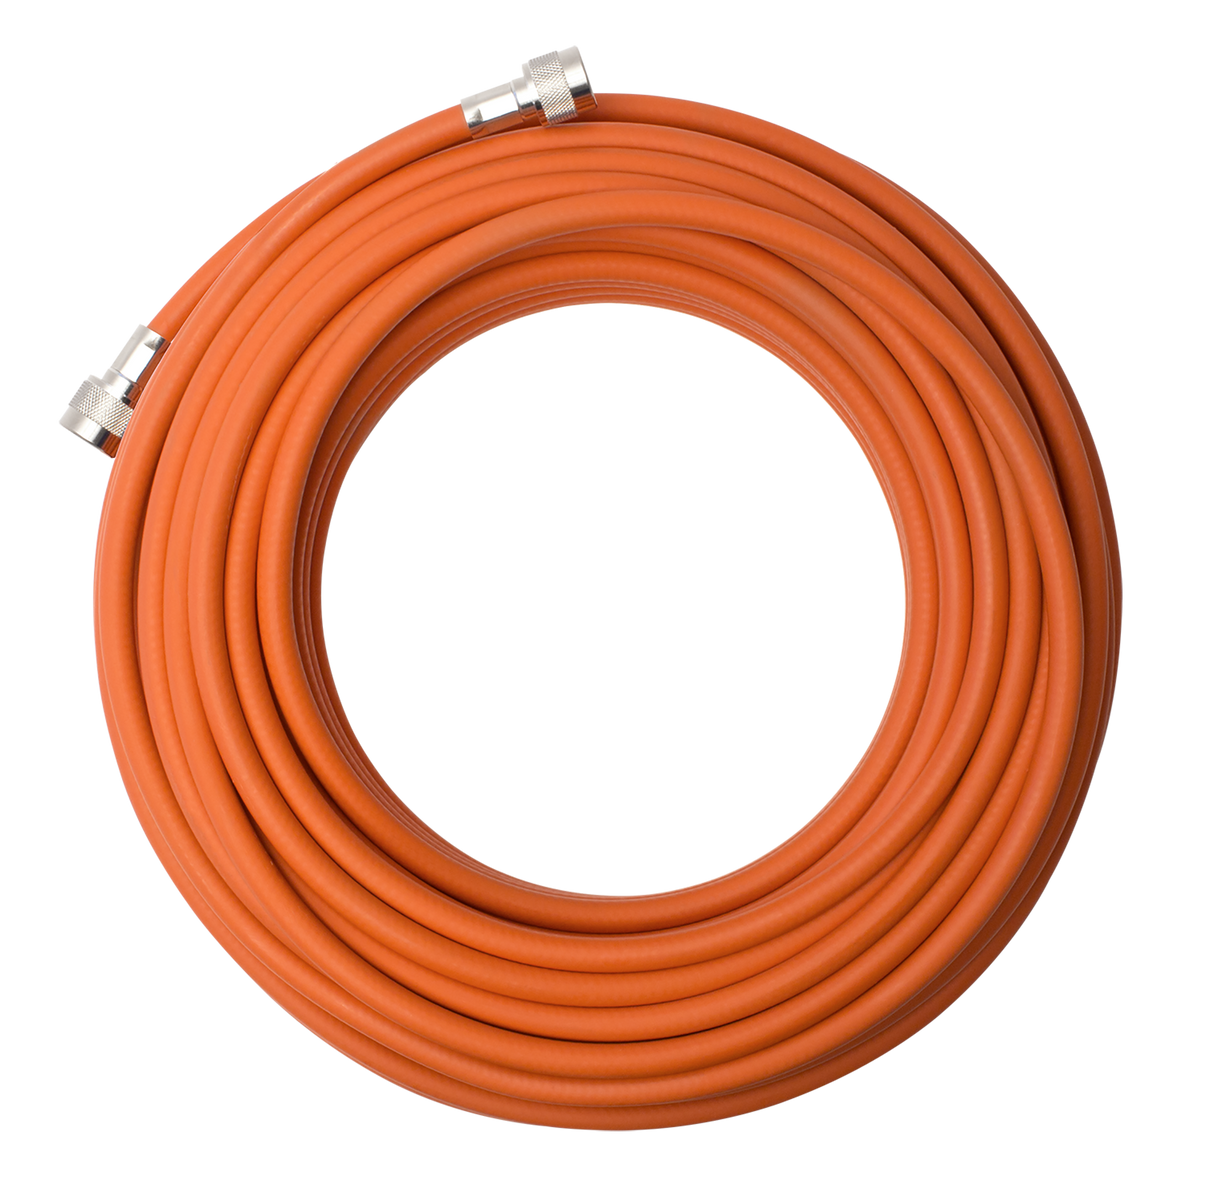 500’ Wilson-400 Bulk Plenum Cable with Orange Jacket [Discontinued]